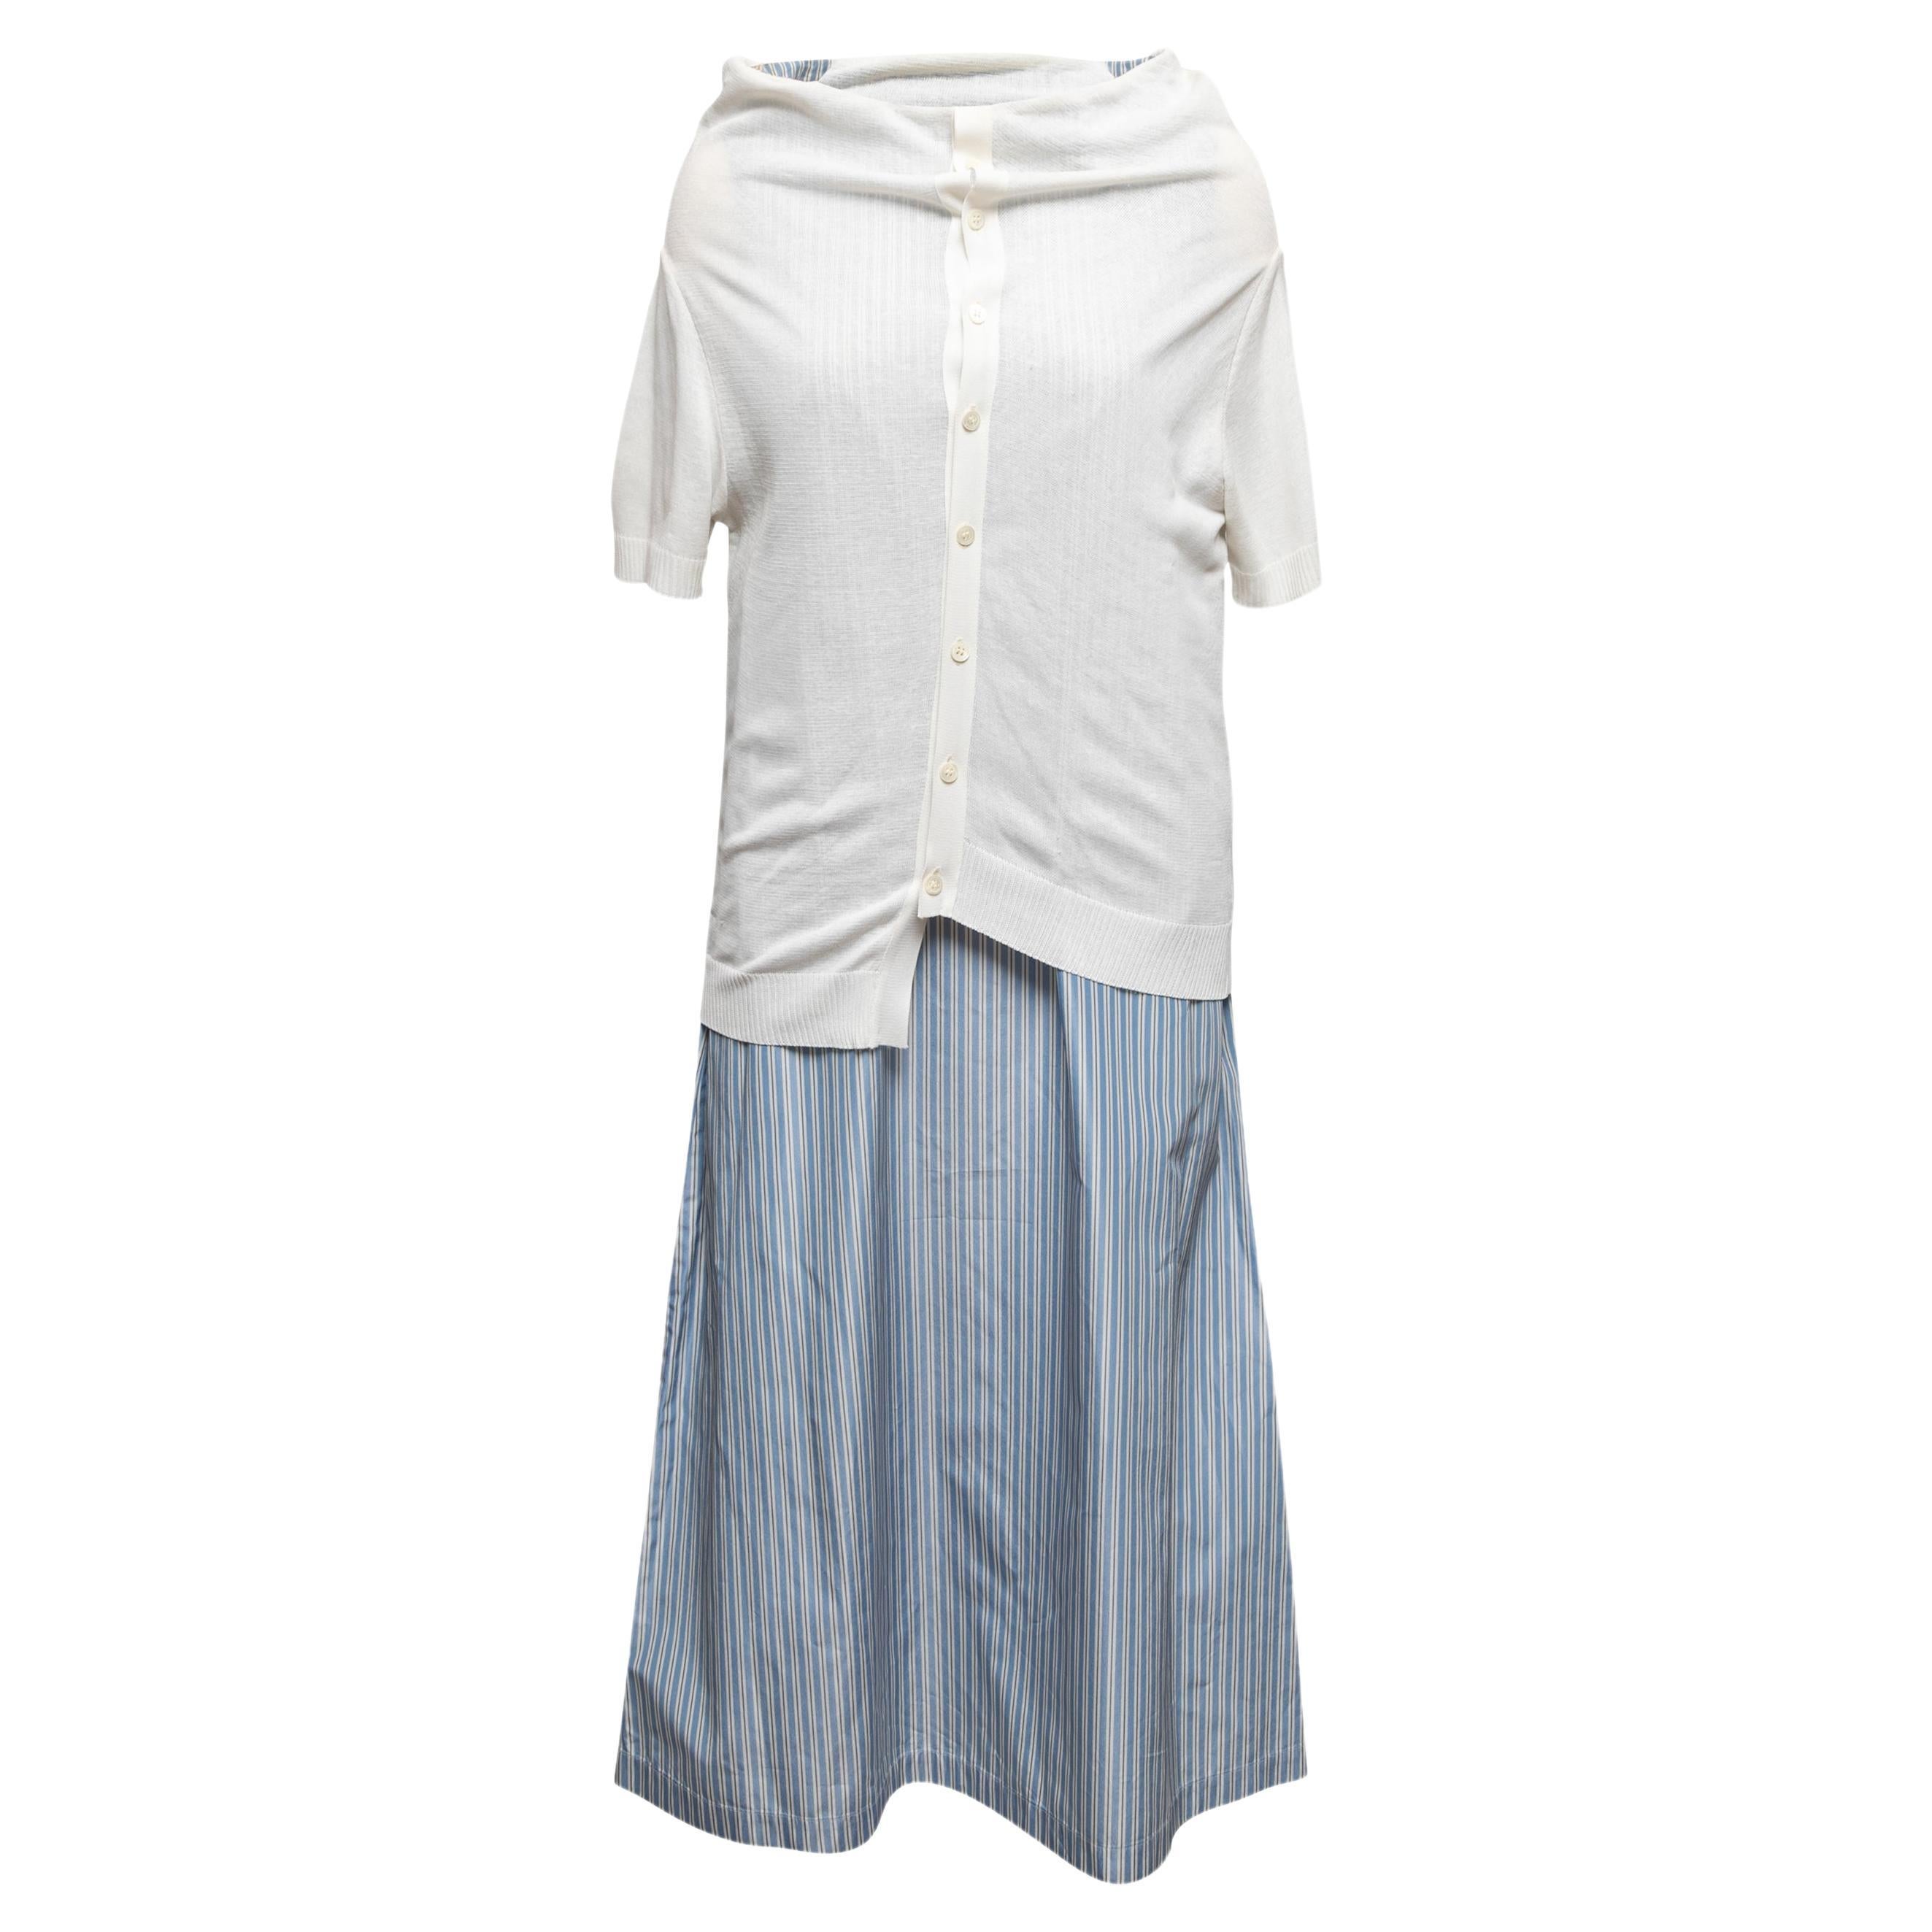 White & Light Blue Tricot Comme Des Garcons Layered Dress Size US S